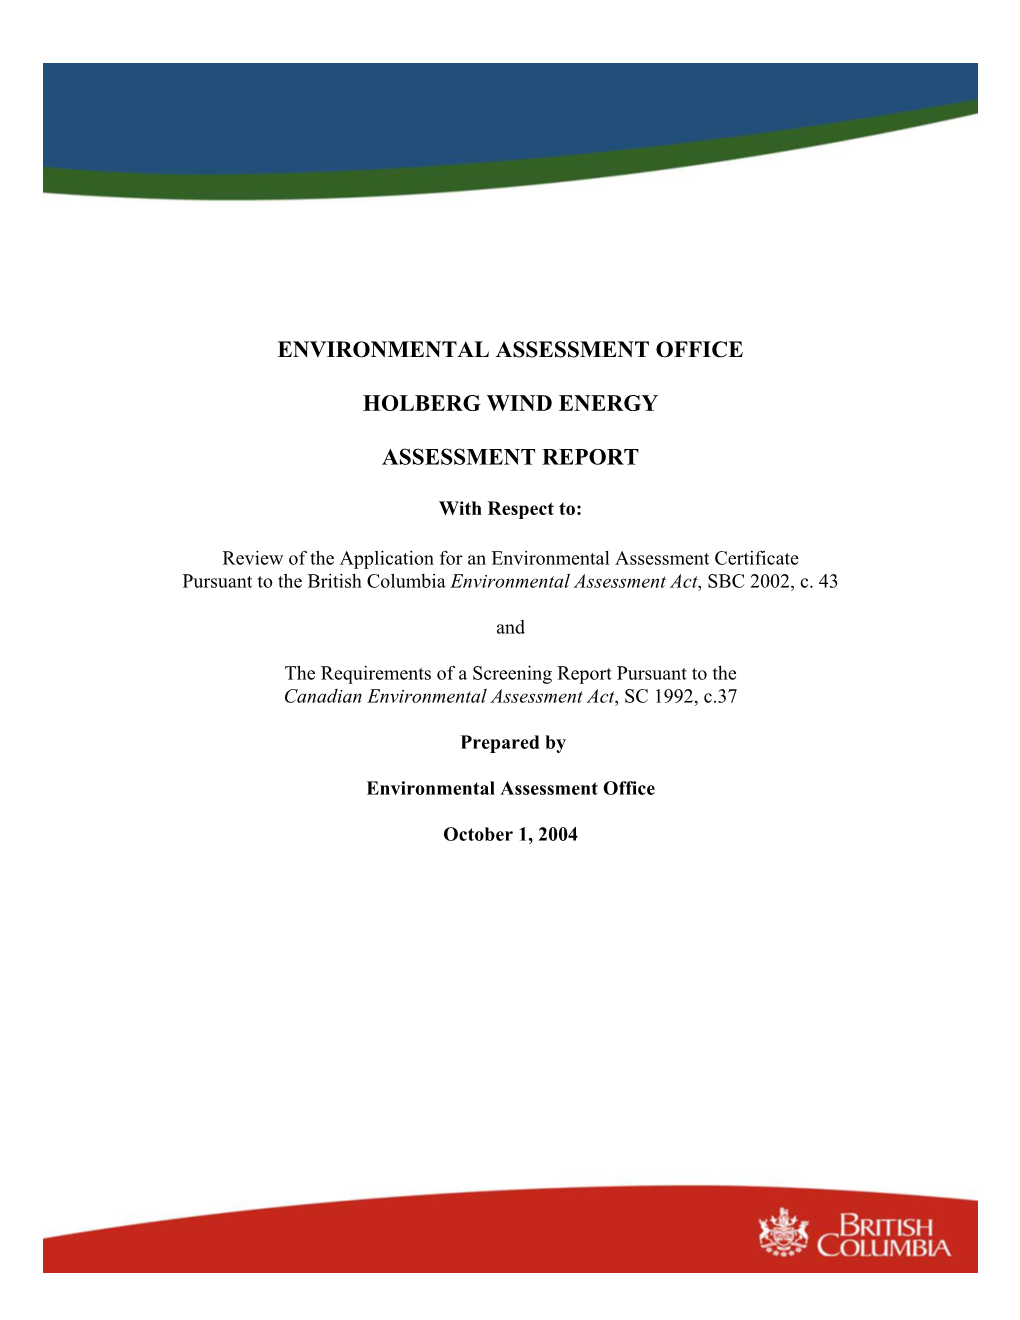 Holberg Wind Energy Assessment Report 1